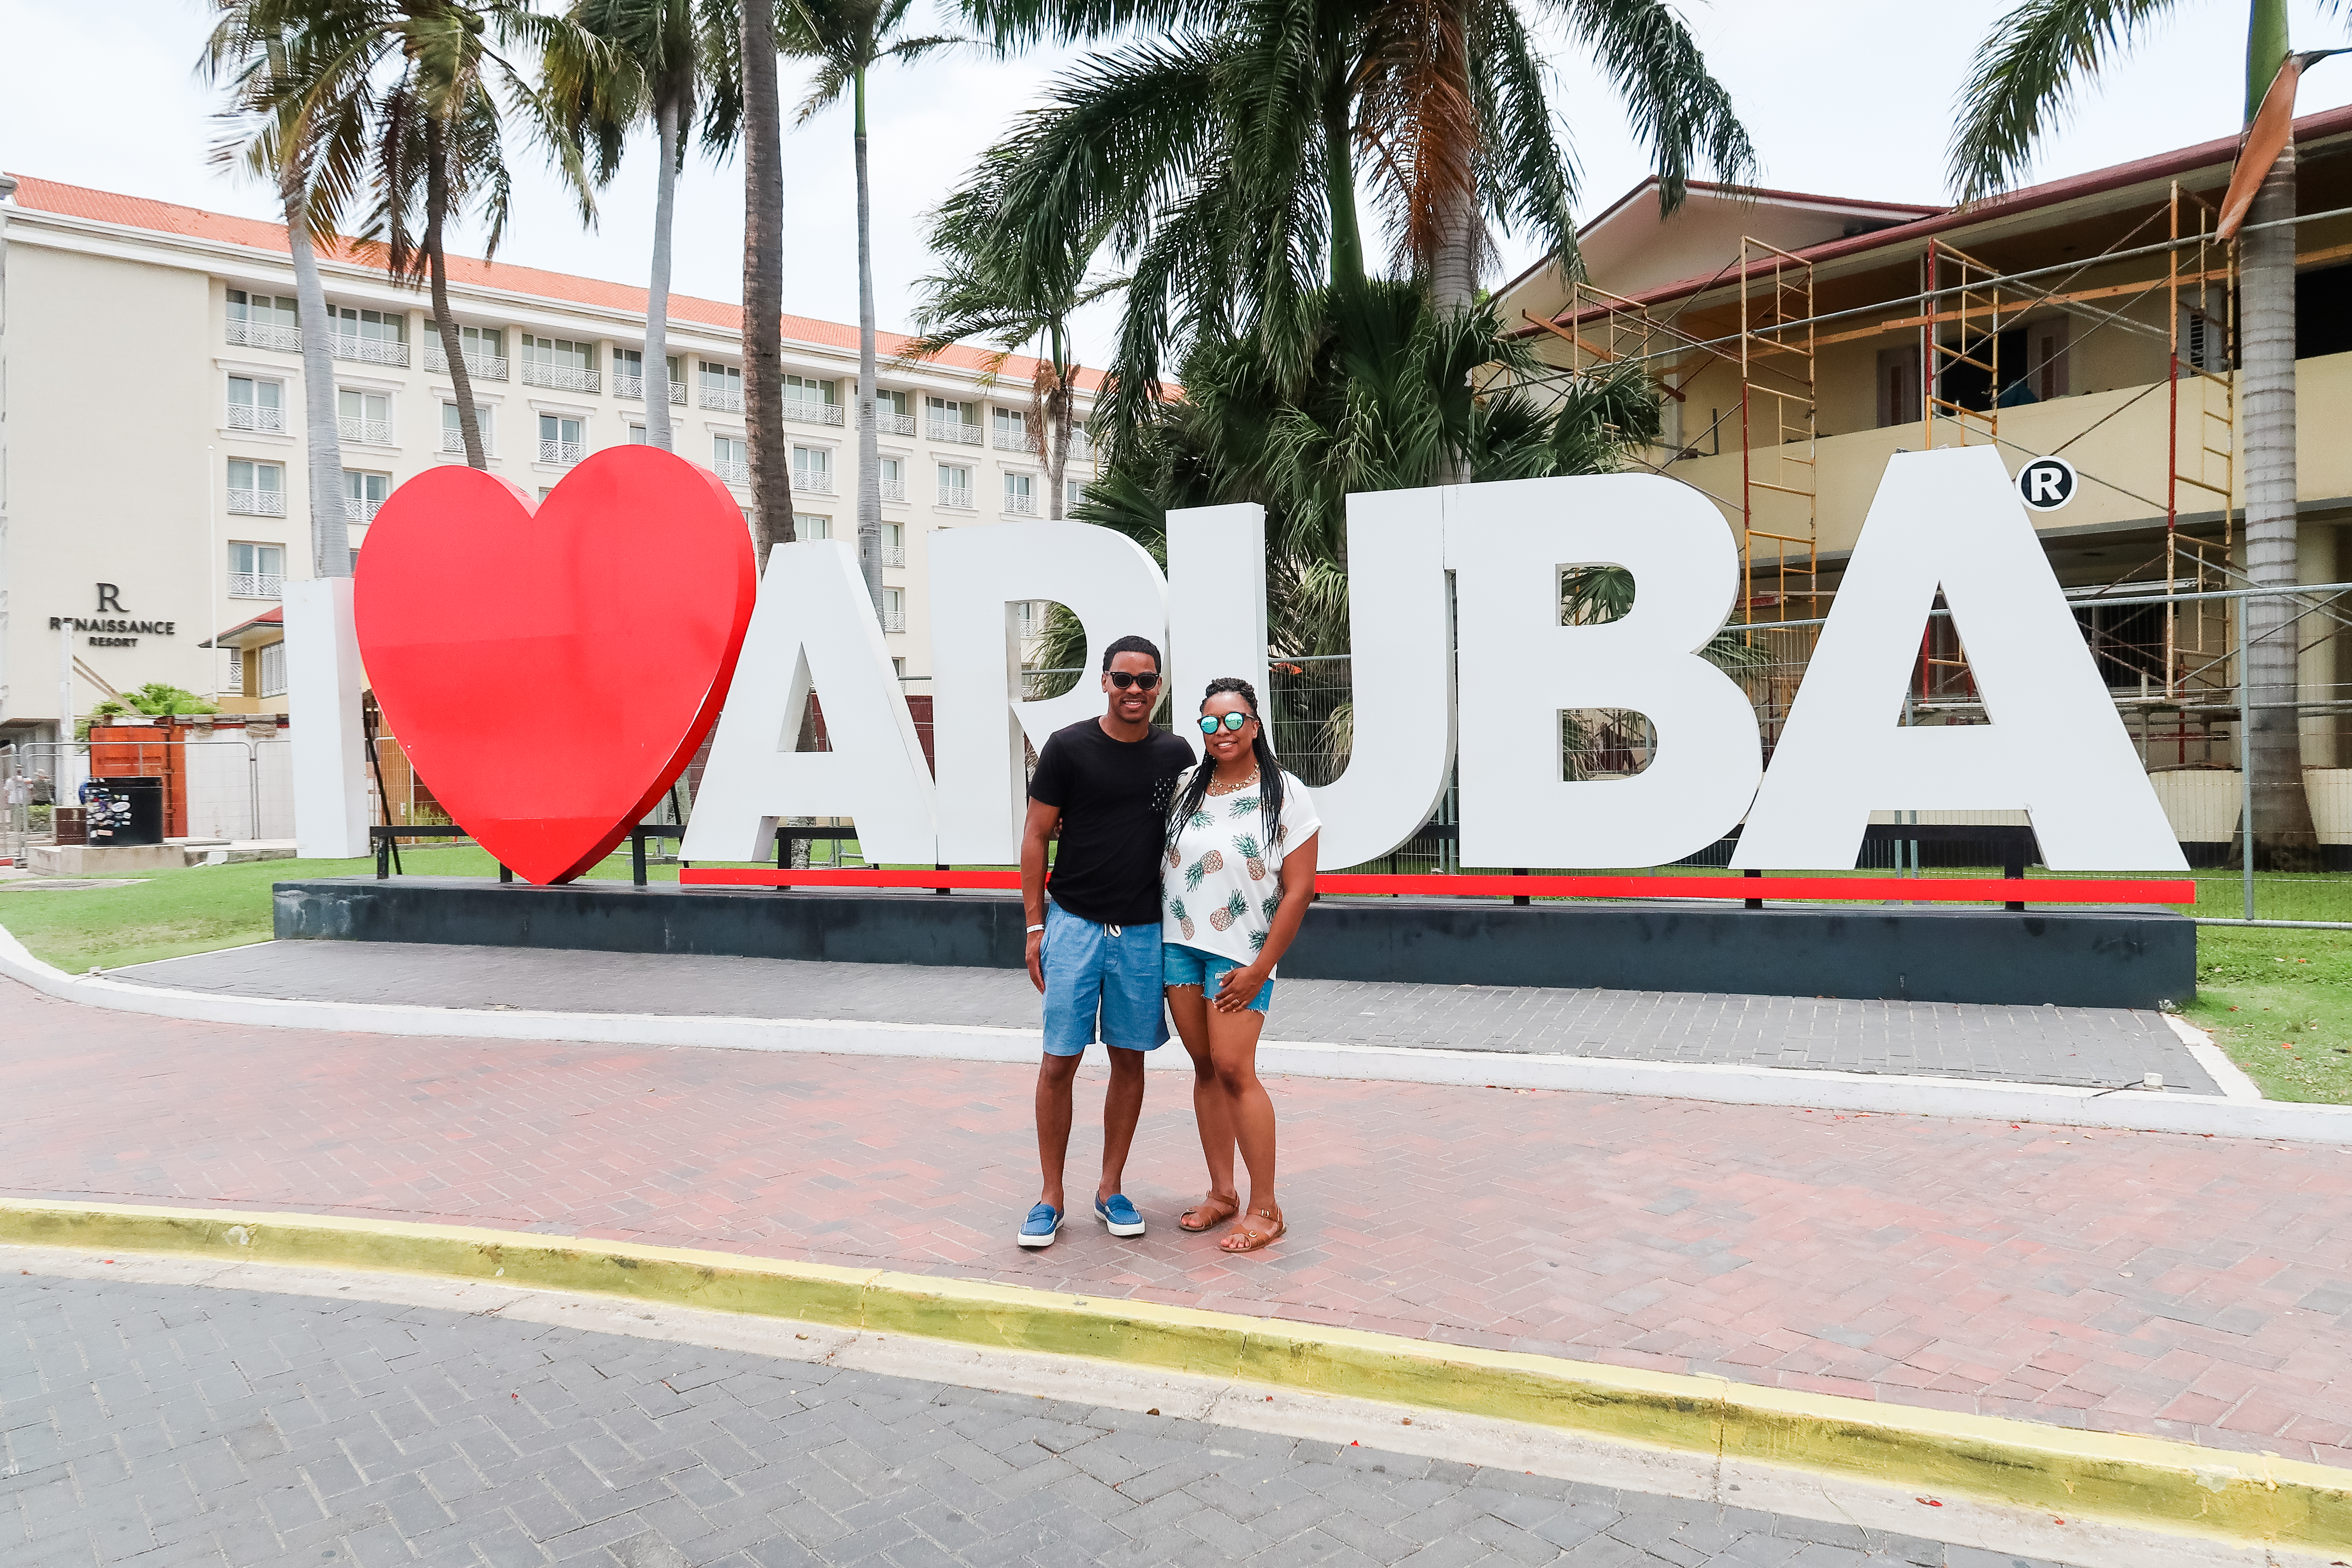 Aruba vacation 2019